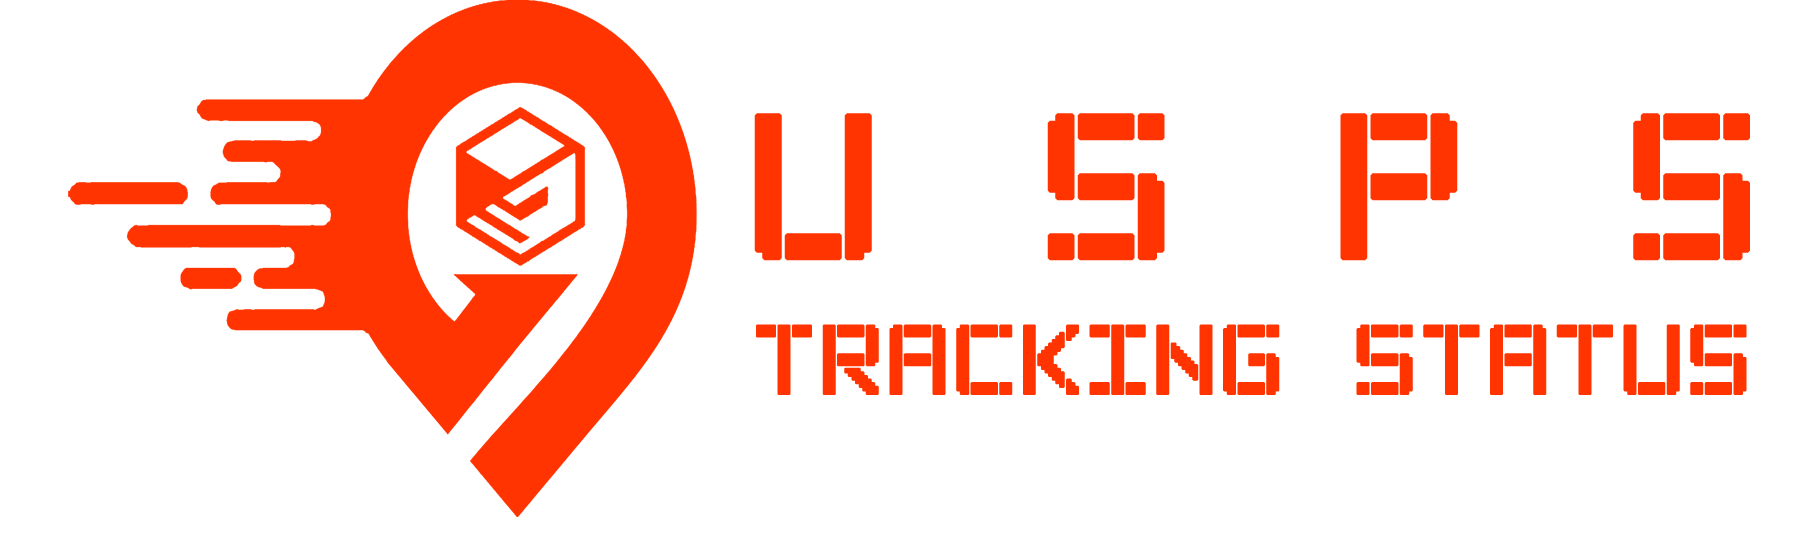 USPS Tracking